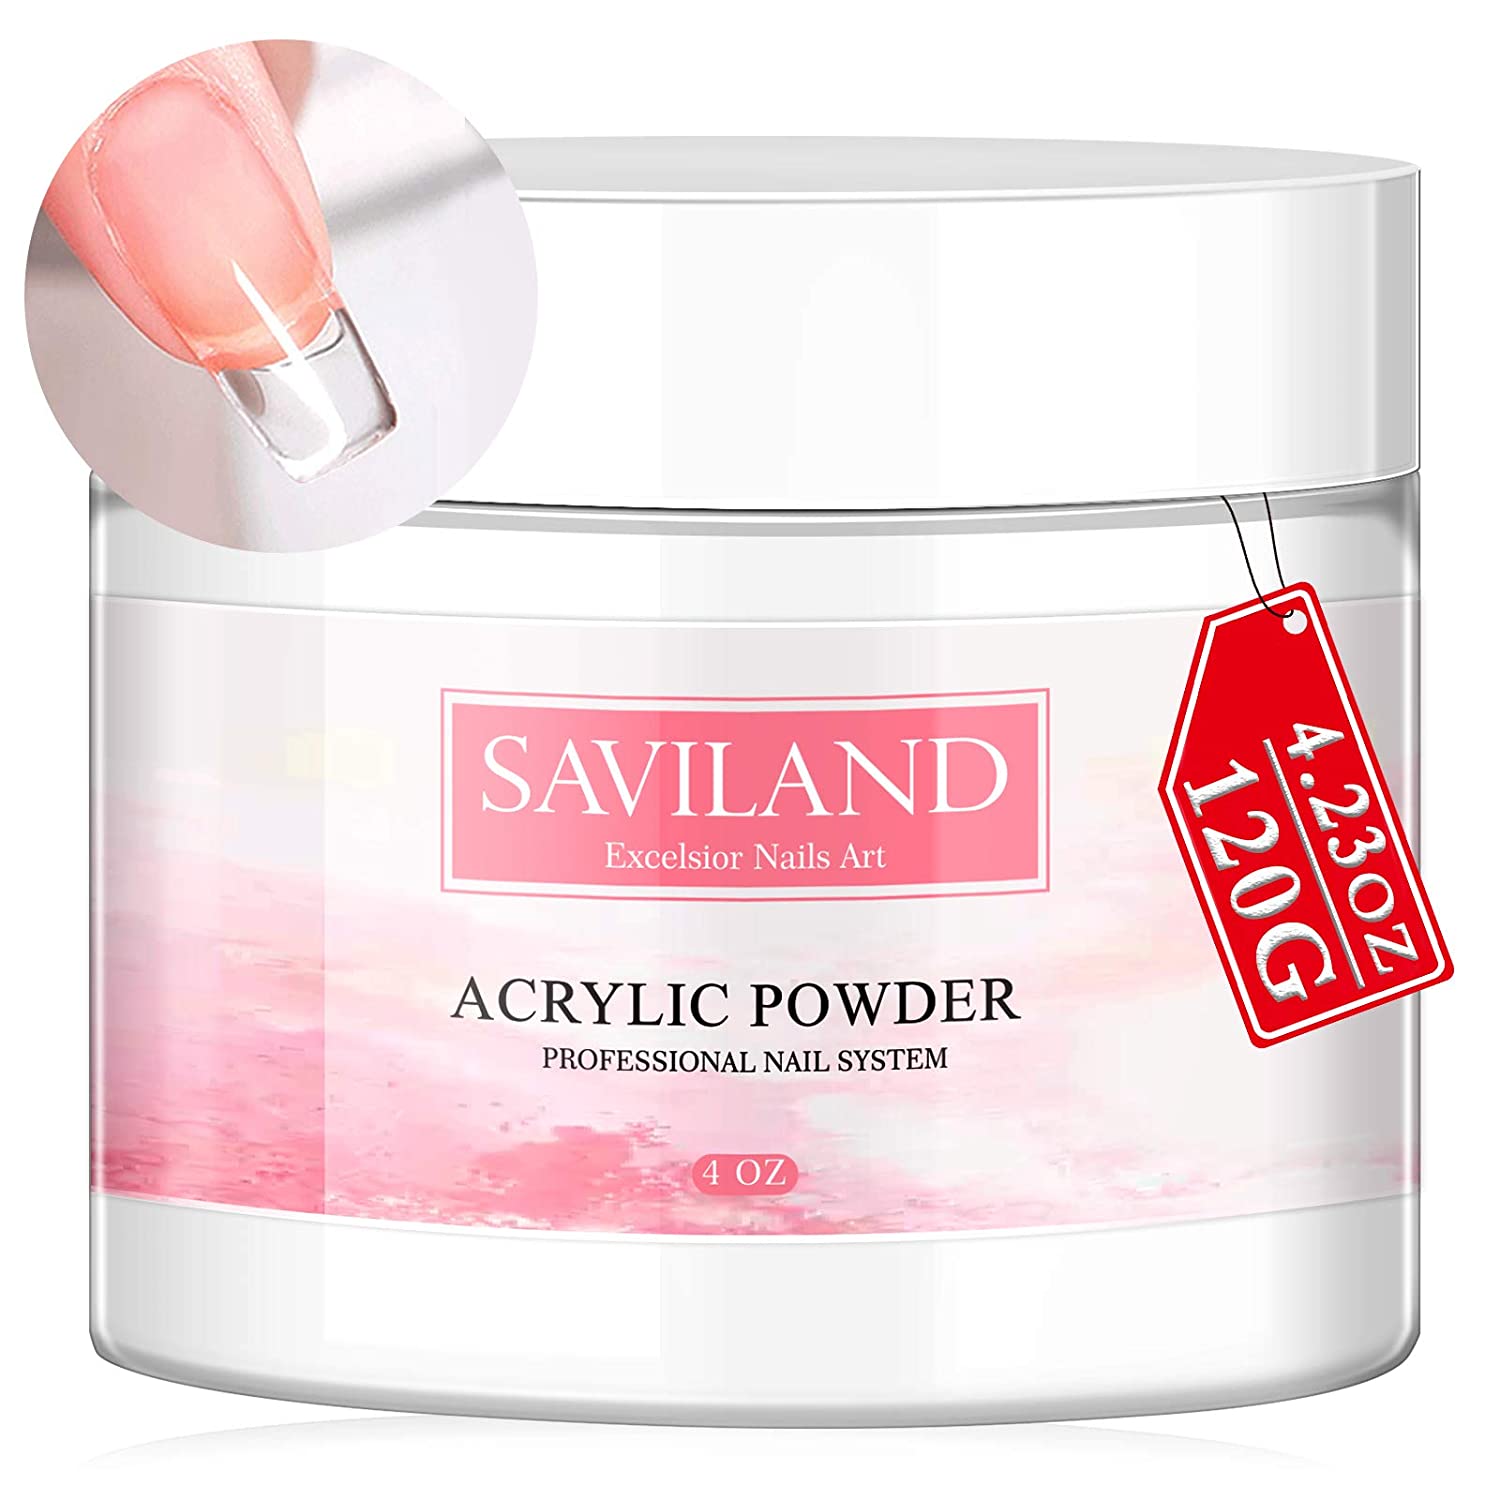  Saviland Peony Acrylic Powder - 30g Professional